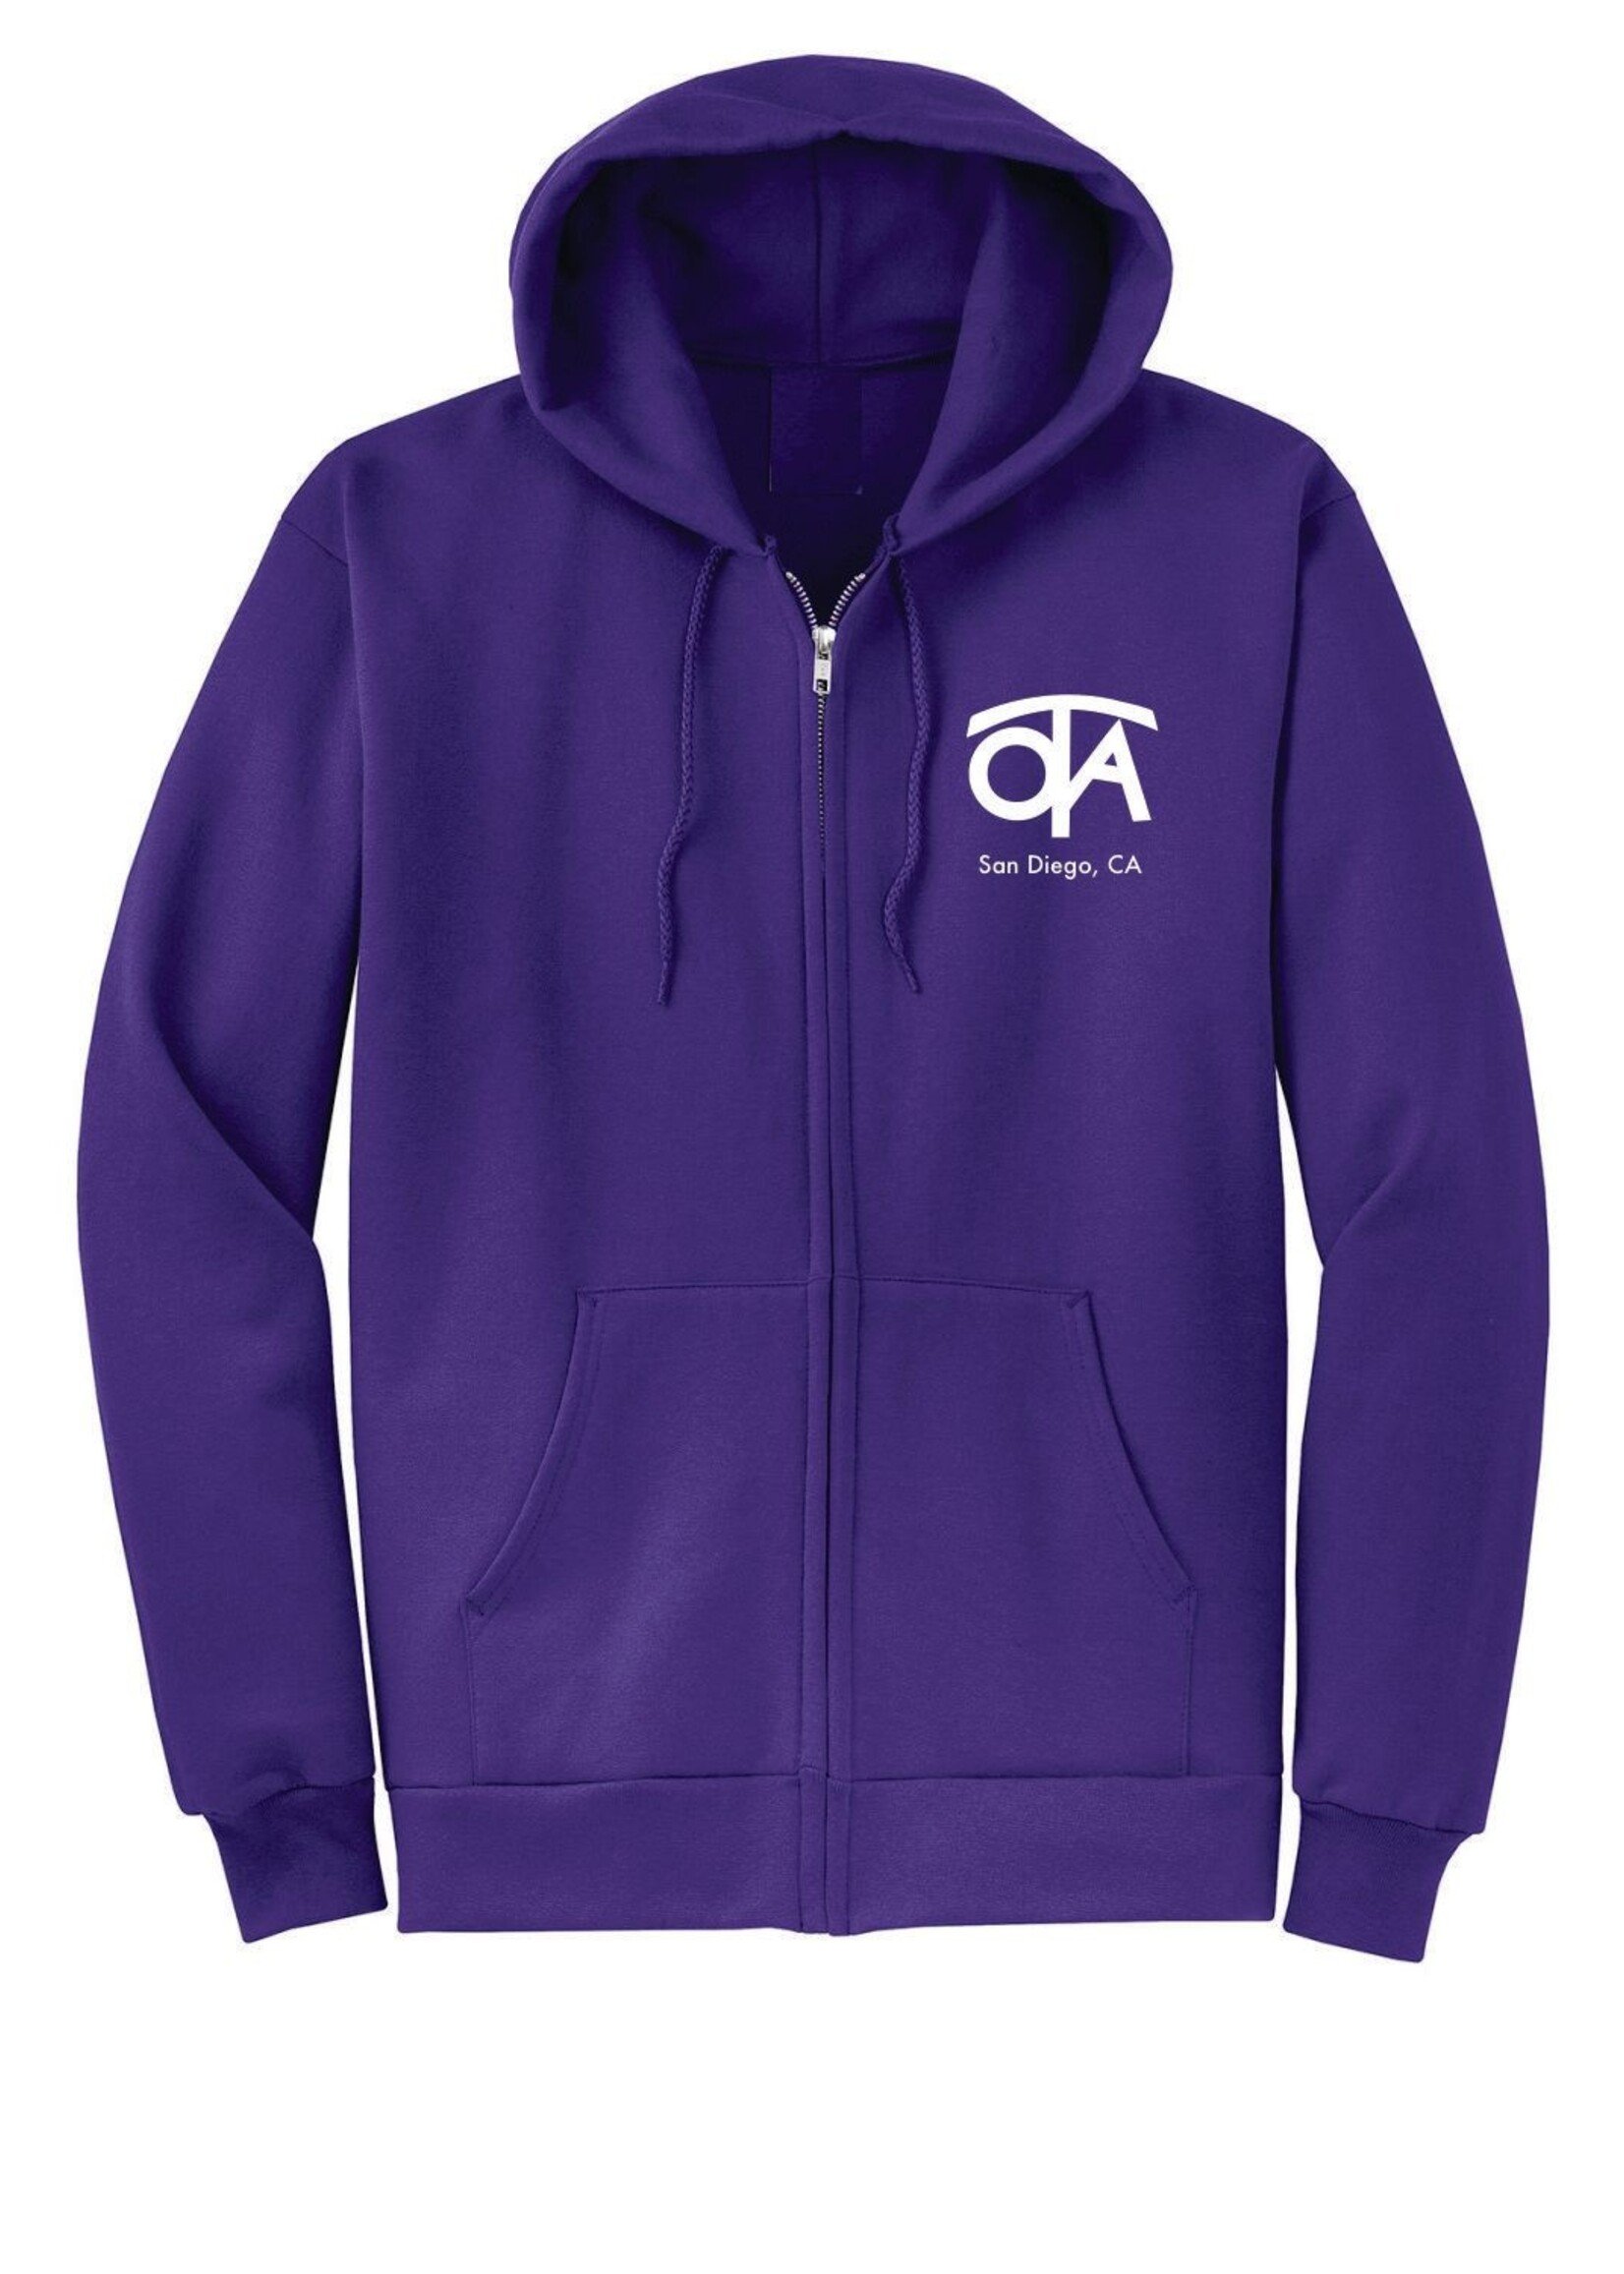 OTA Purple Full Zip Hoodie